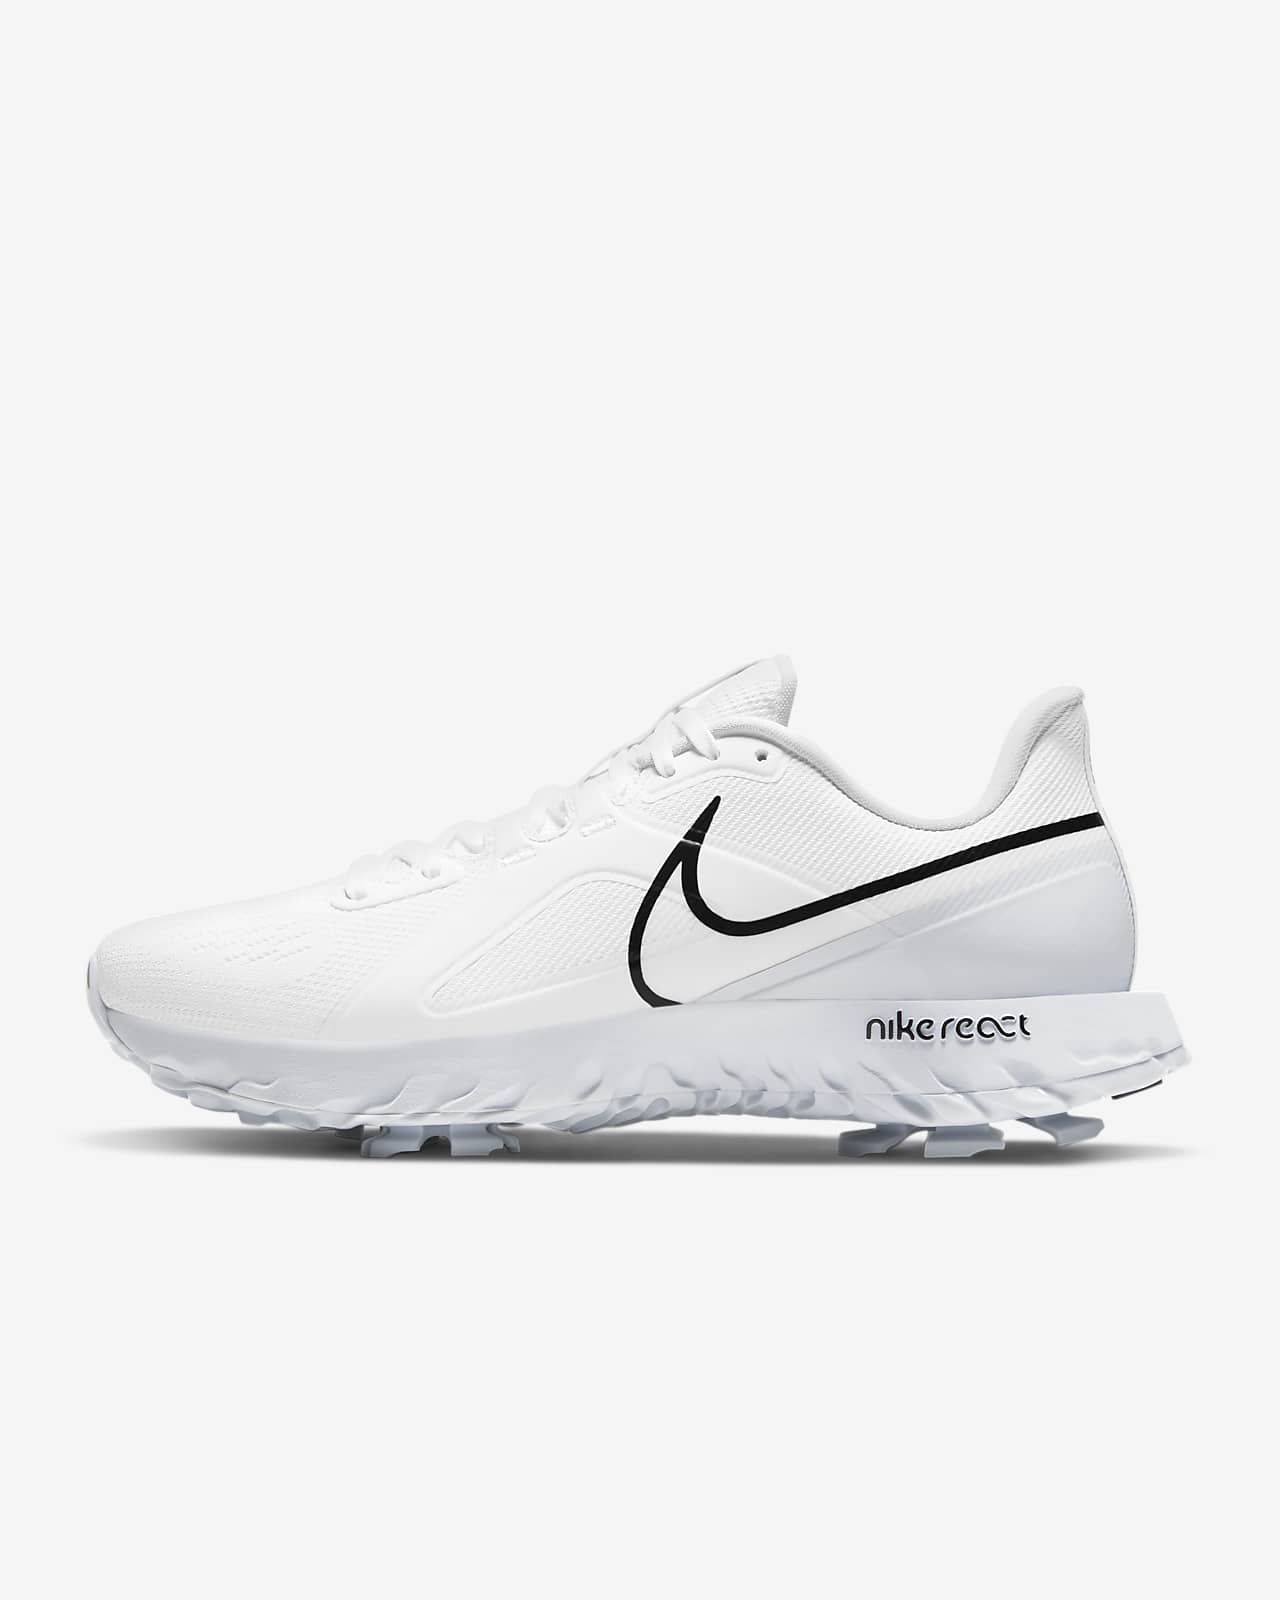 Nike React Infinity Pro Golf Shoe